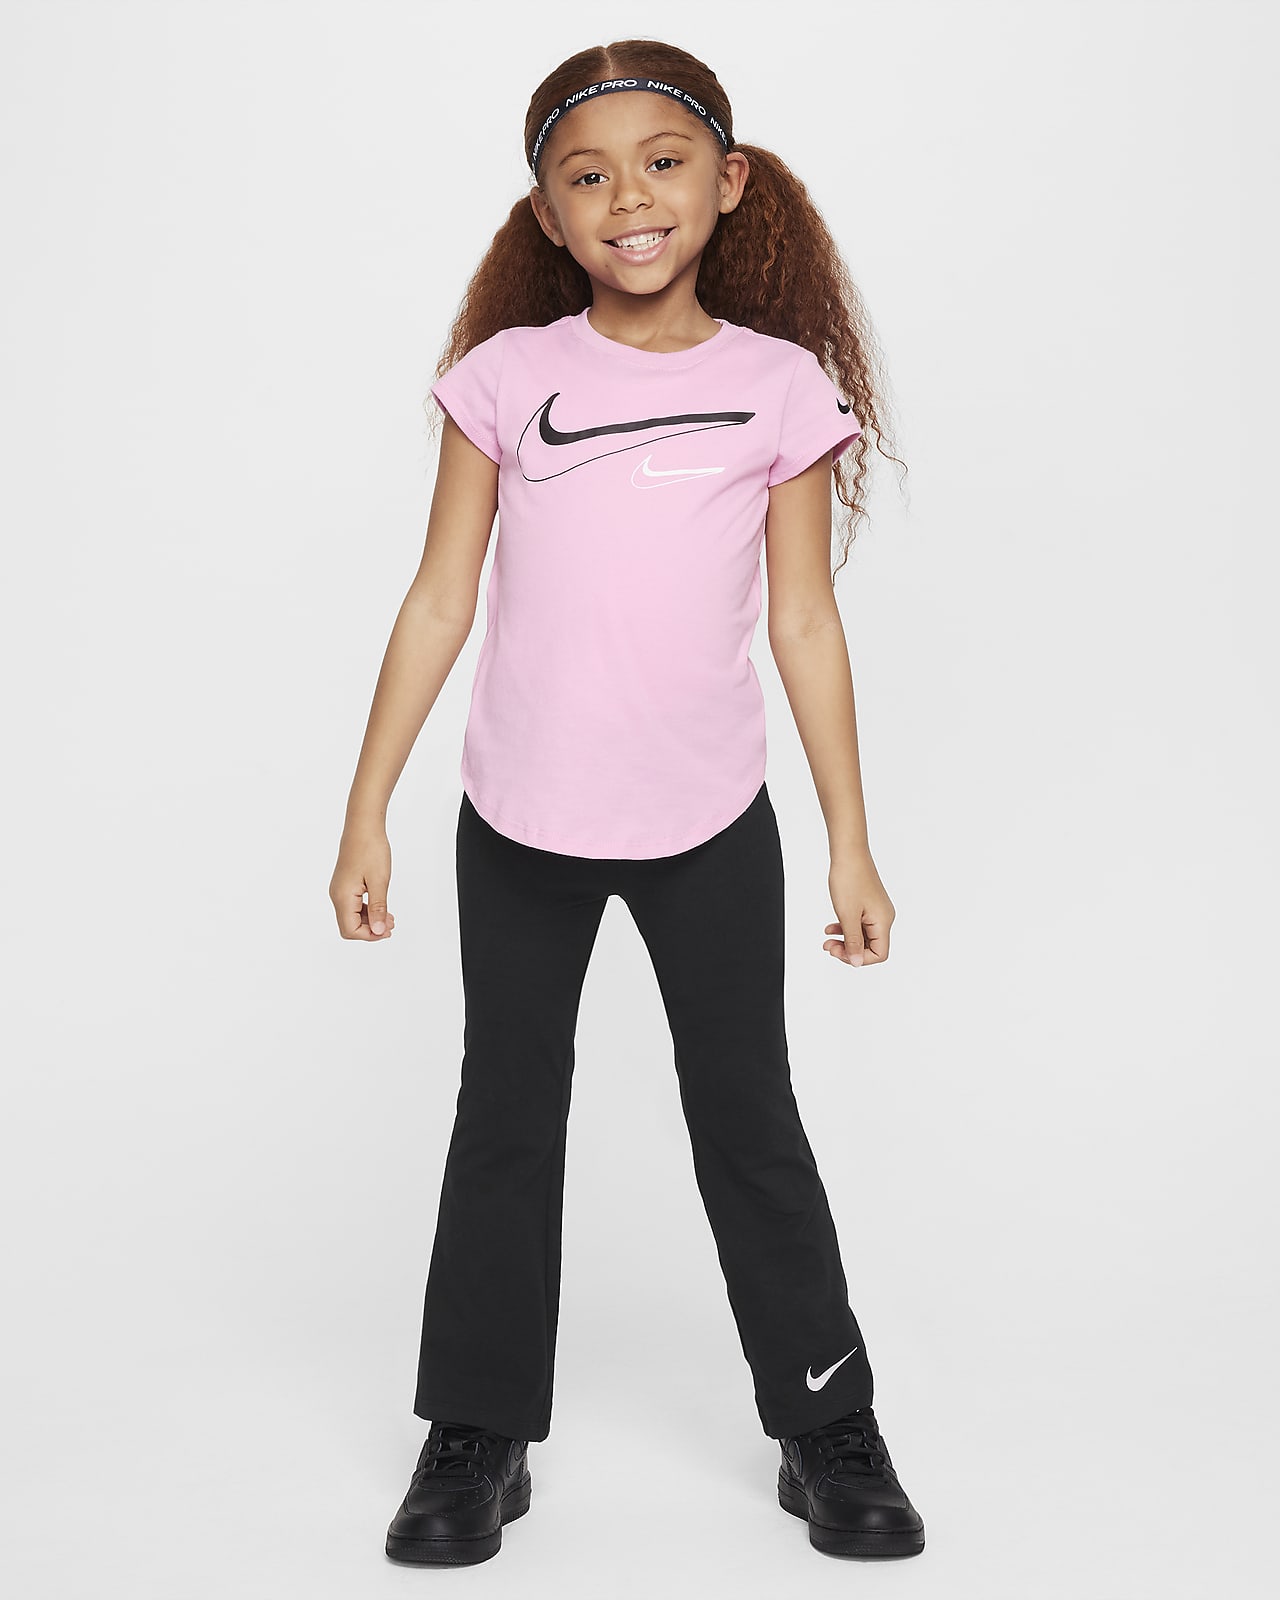 Nike Little Kids' Tee and Flare Leggings Set